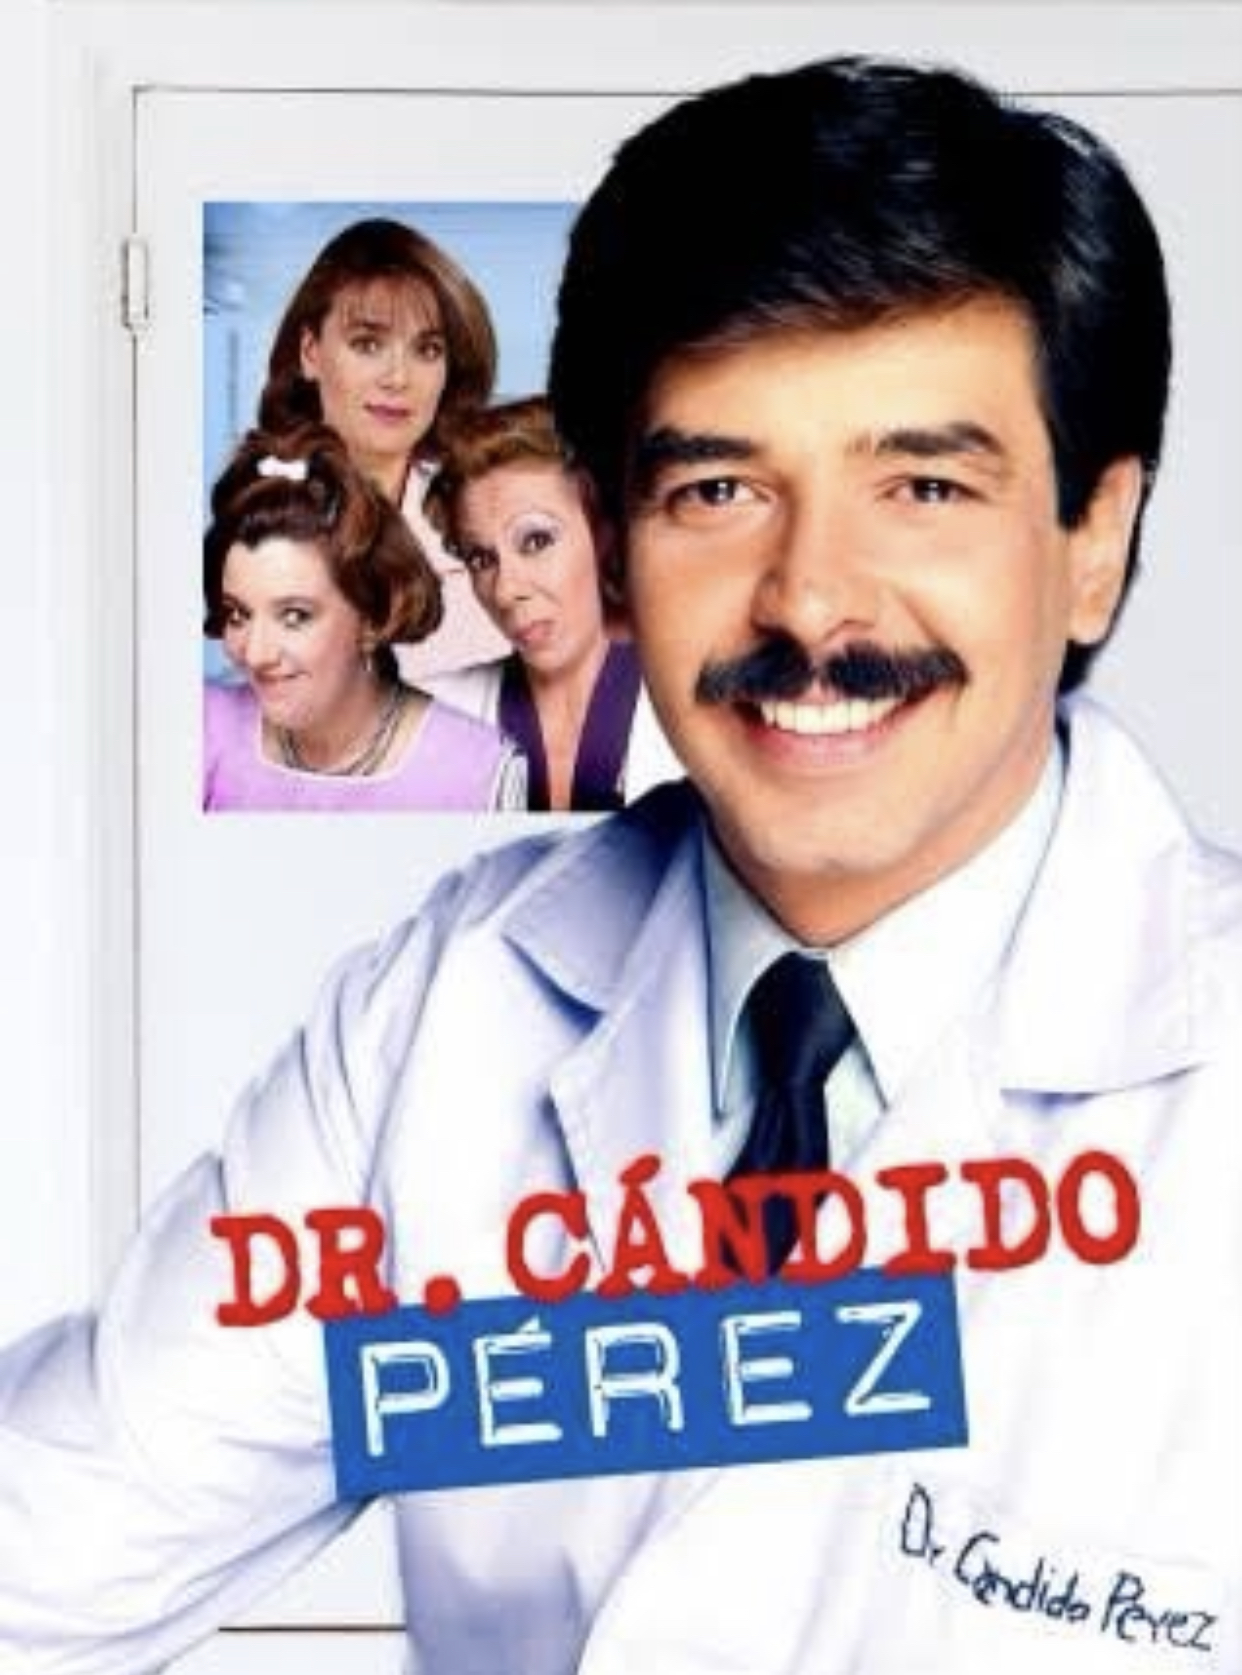 Cándido Pérez, Dr.